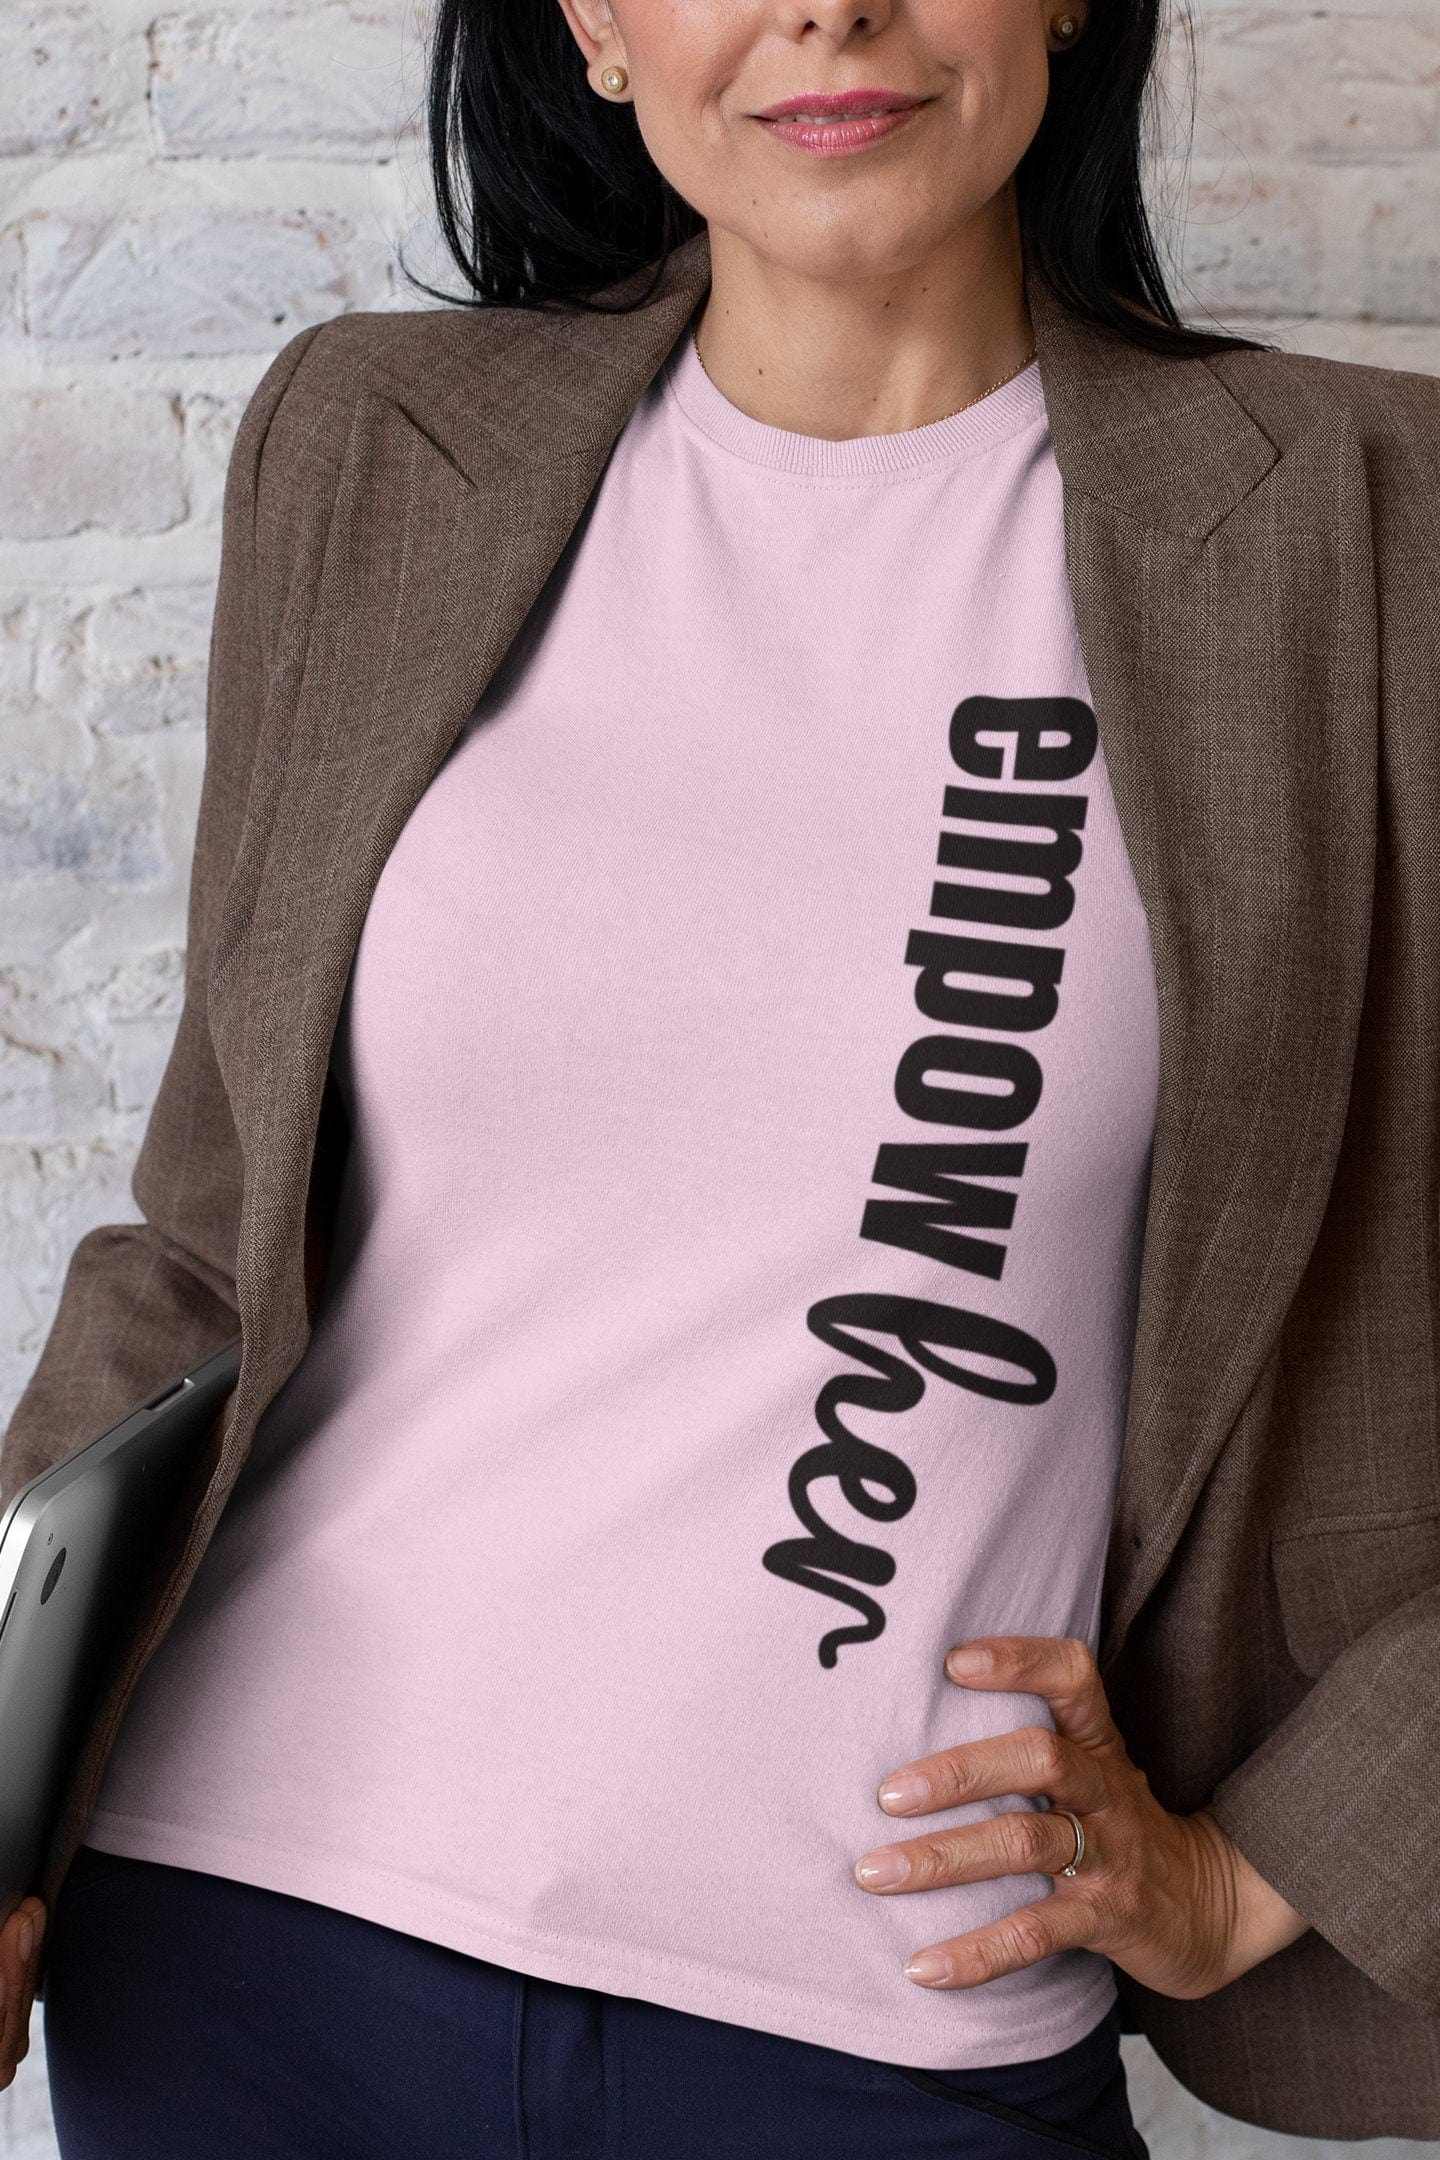 Purple LadyBug Decor Empower Her Shirt | Worthy Shirt | Empowered Women Shirt | Christian Shirt | Self Love Shirt | Self Worthy Shirt | Strong Woman Shirt